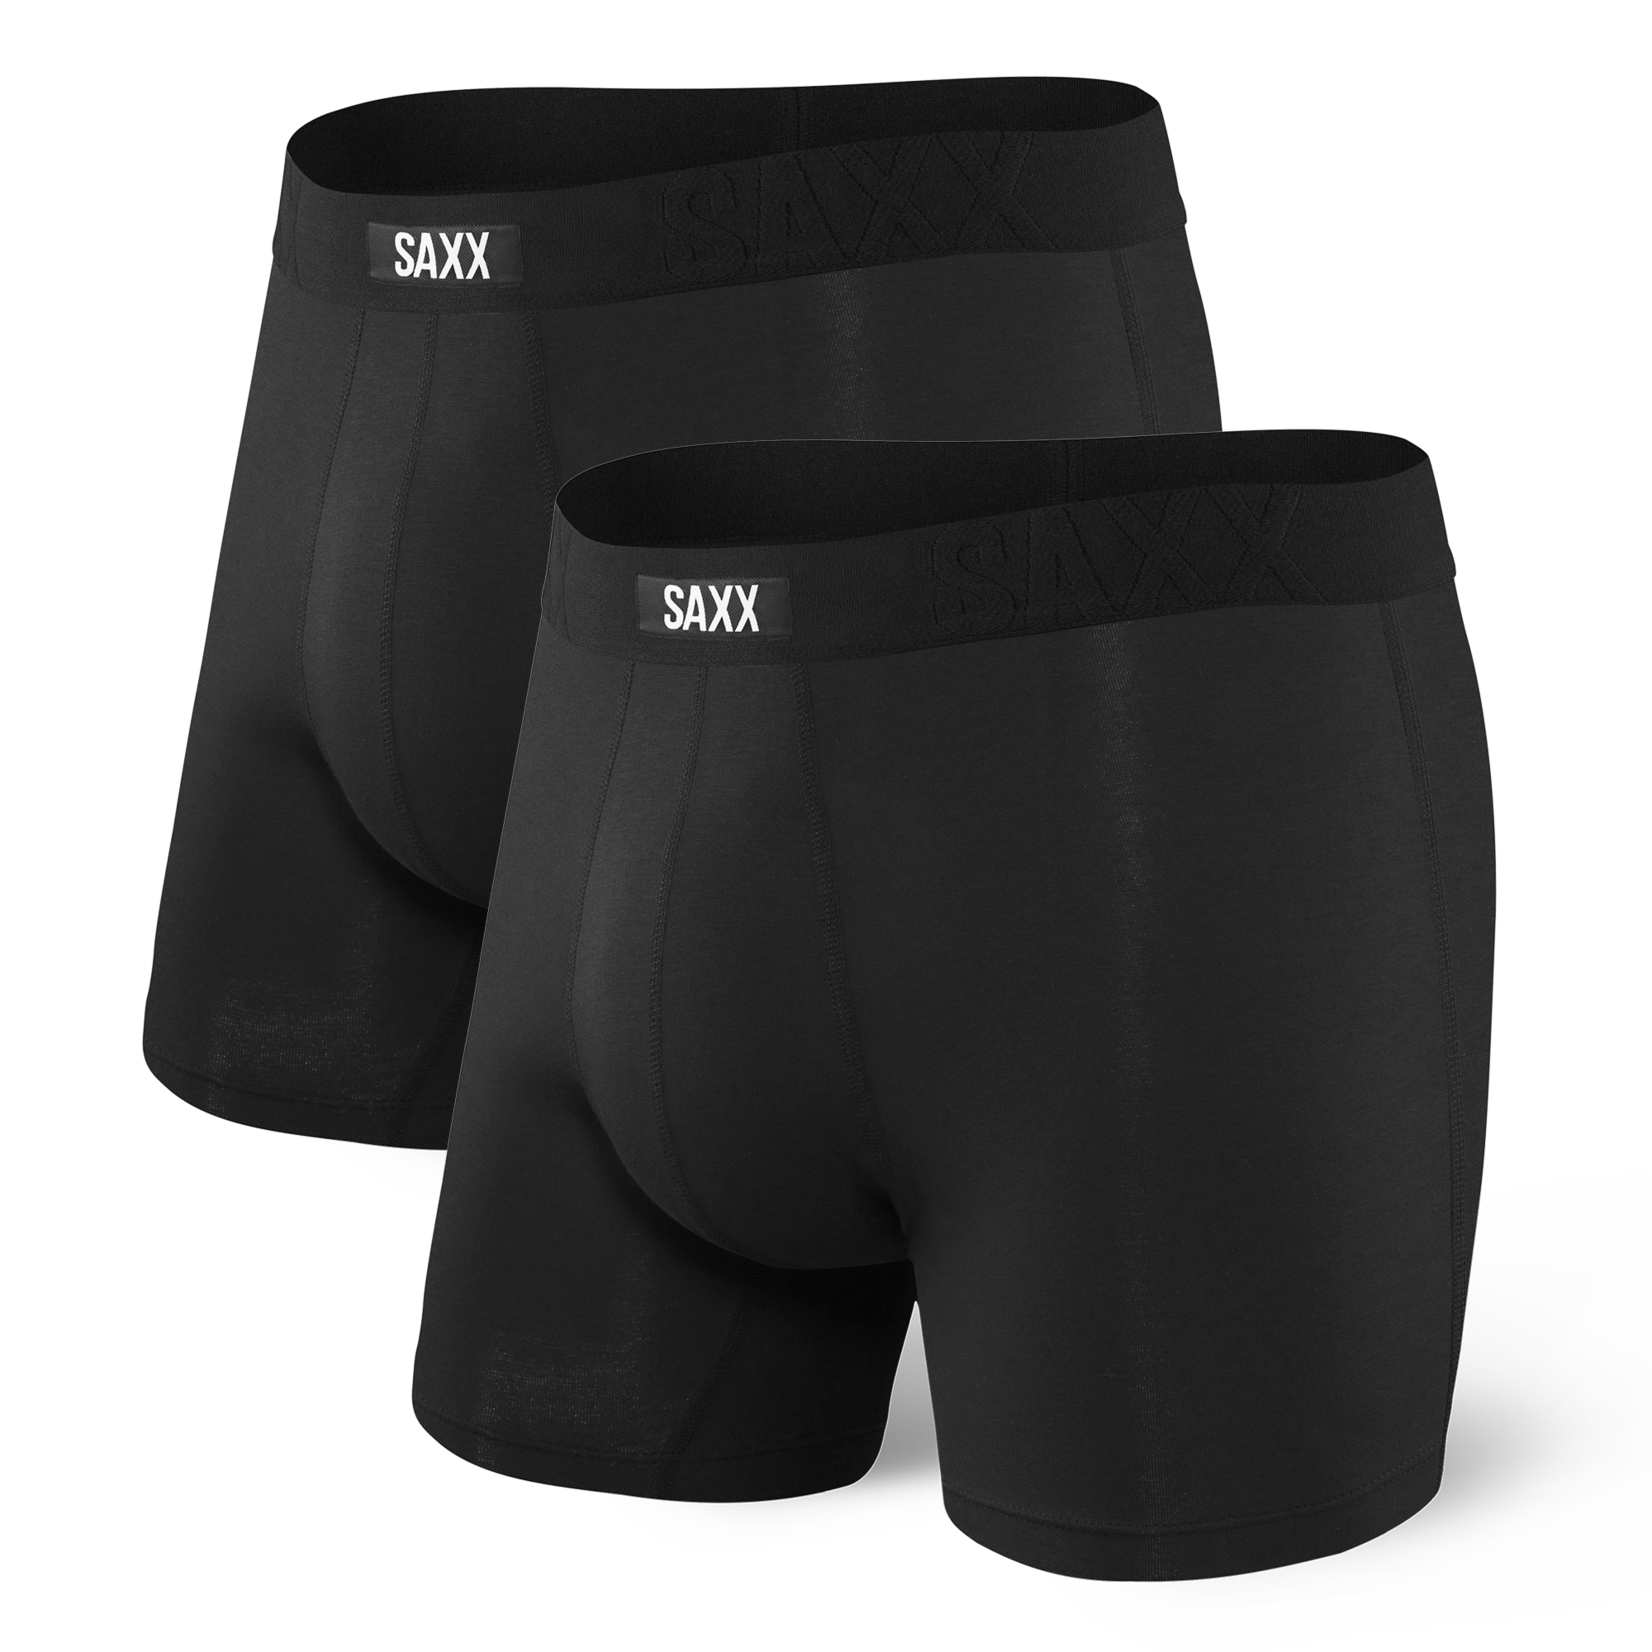 SAXX Undercover Boxer Brief 2 Pack (Black/Black)